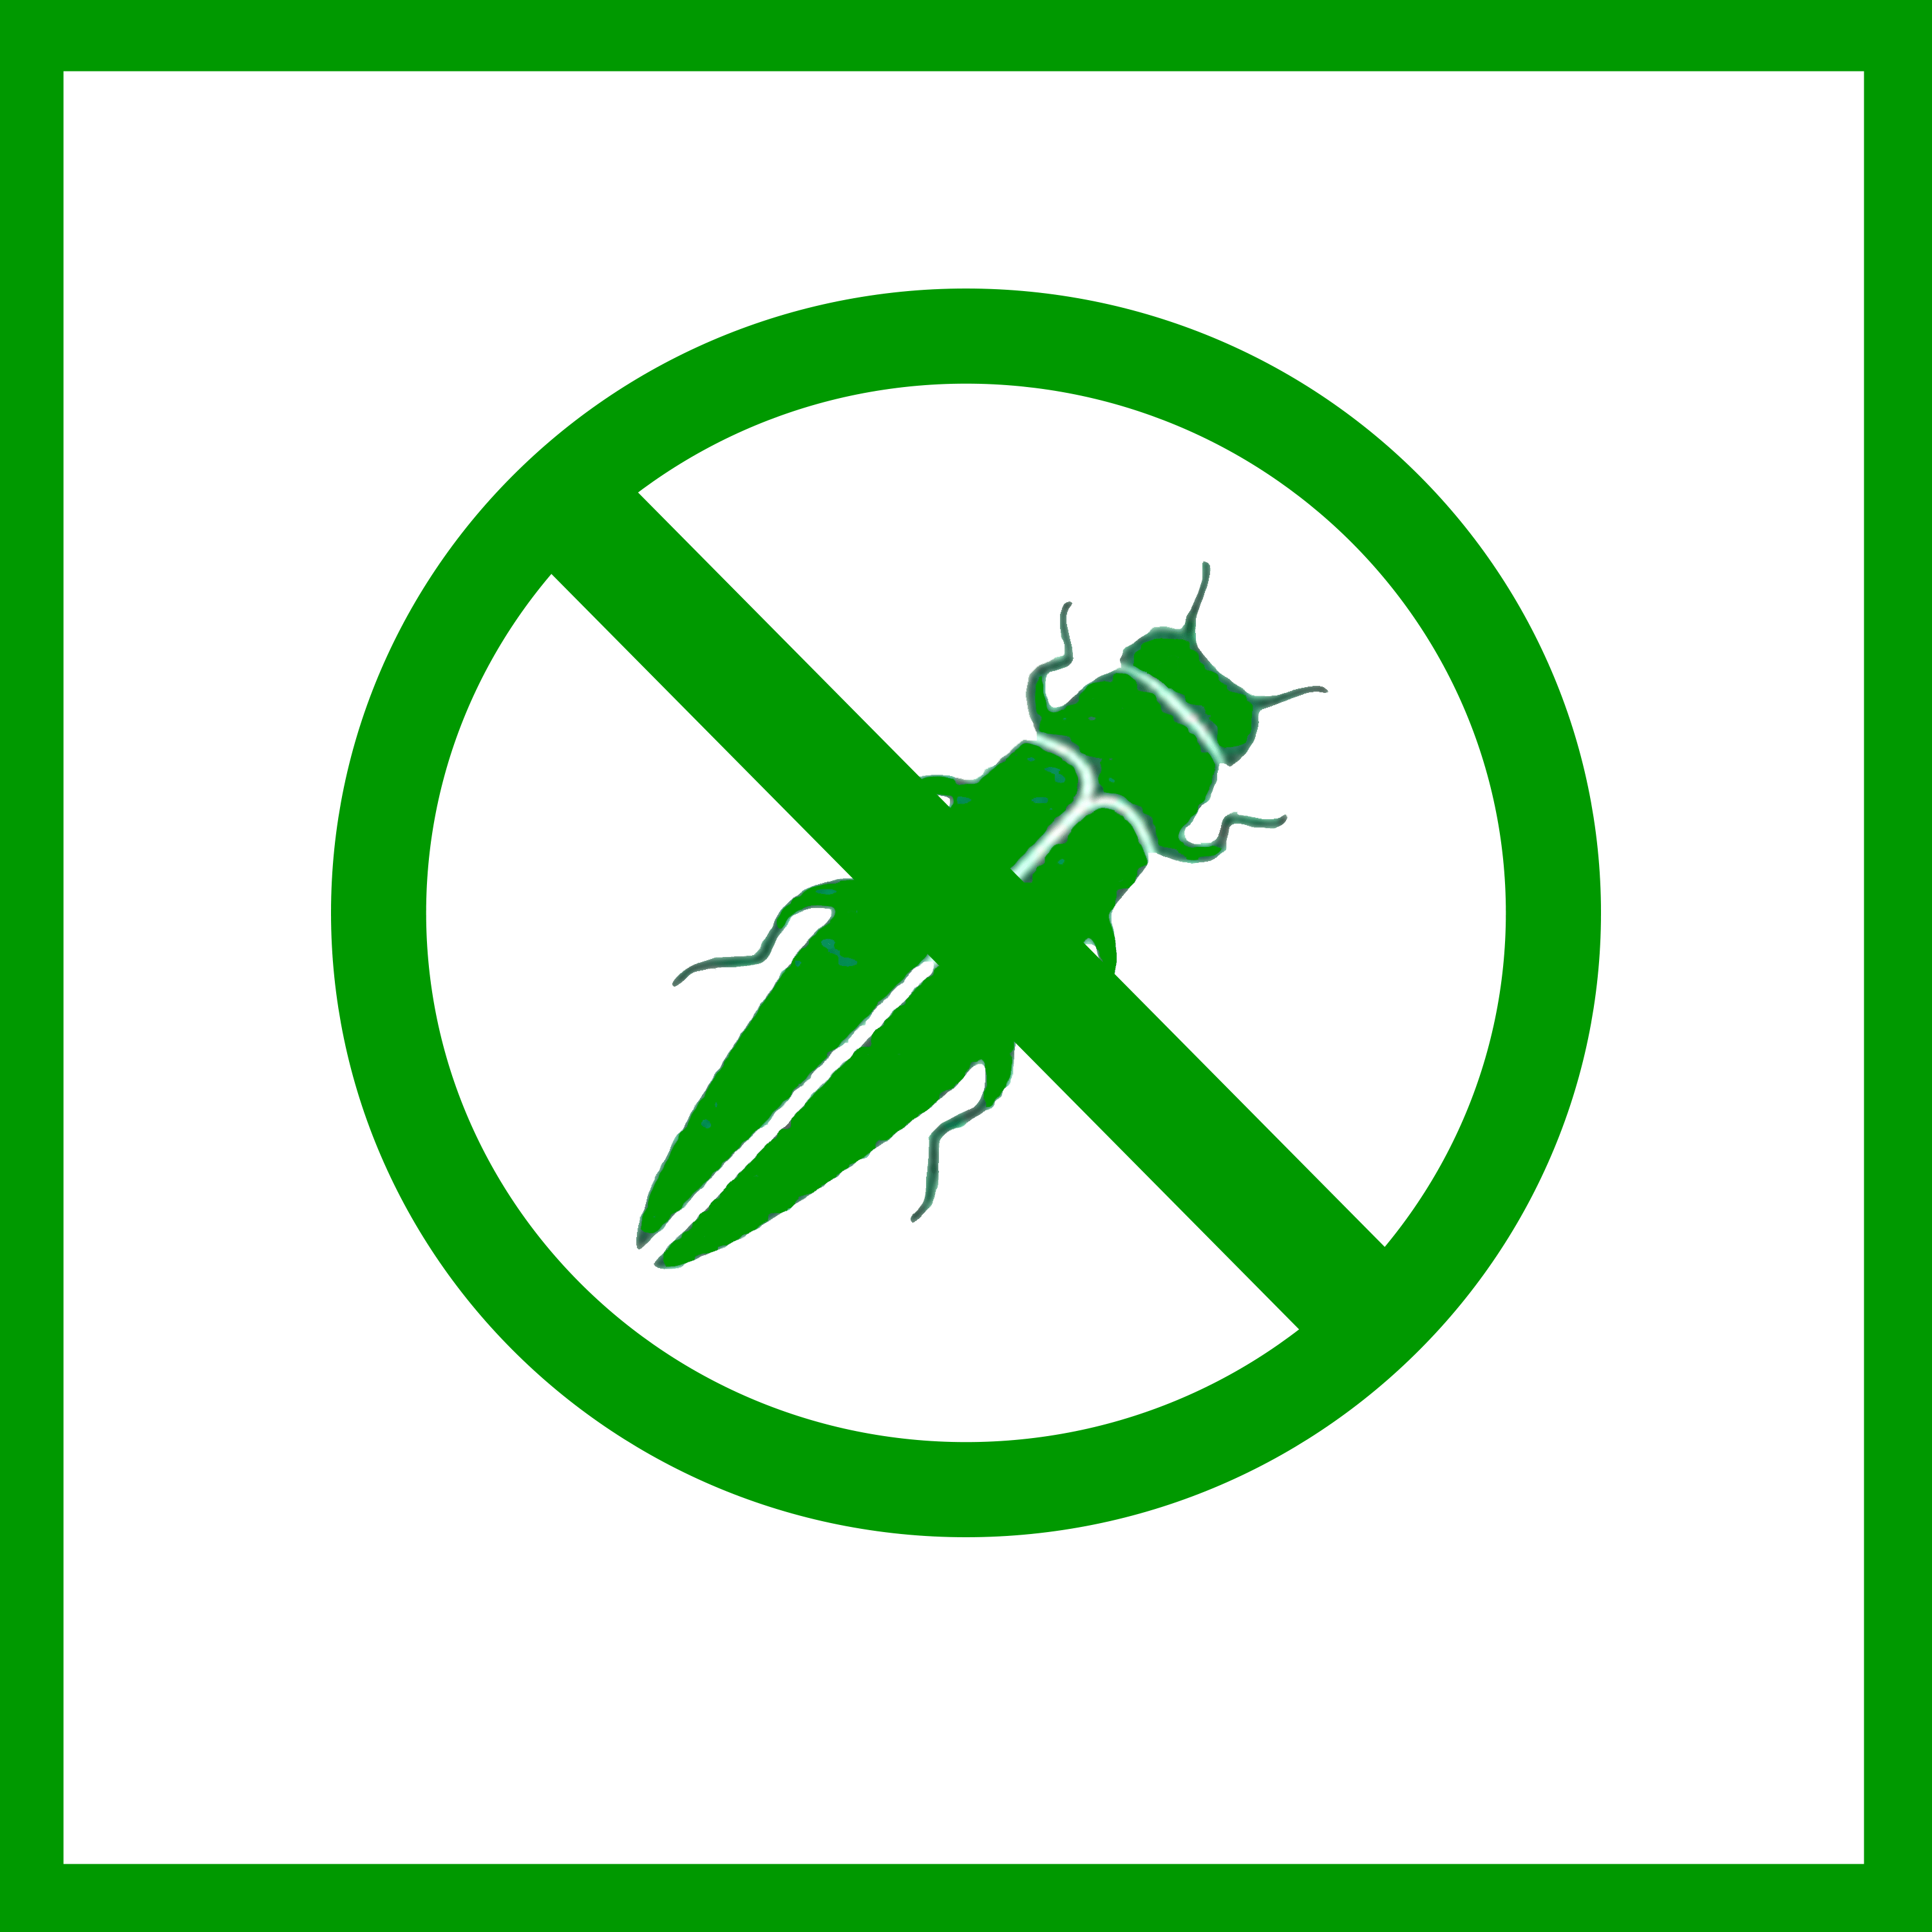 Invasive insect icon